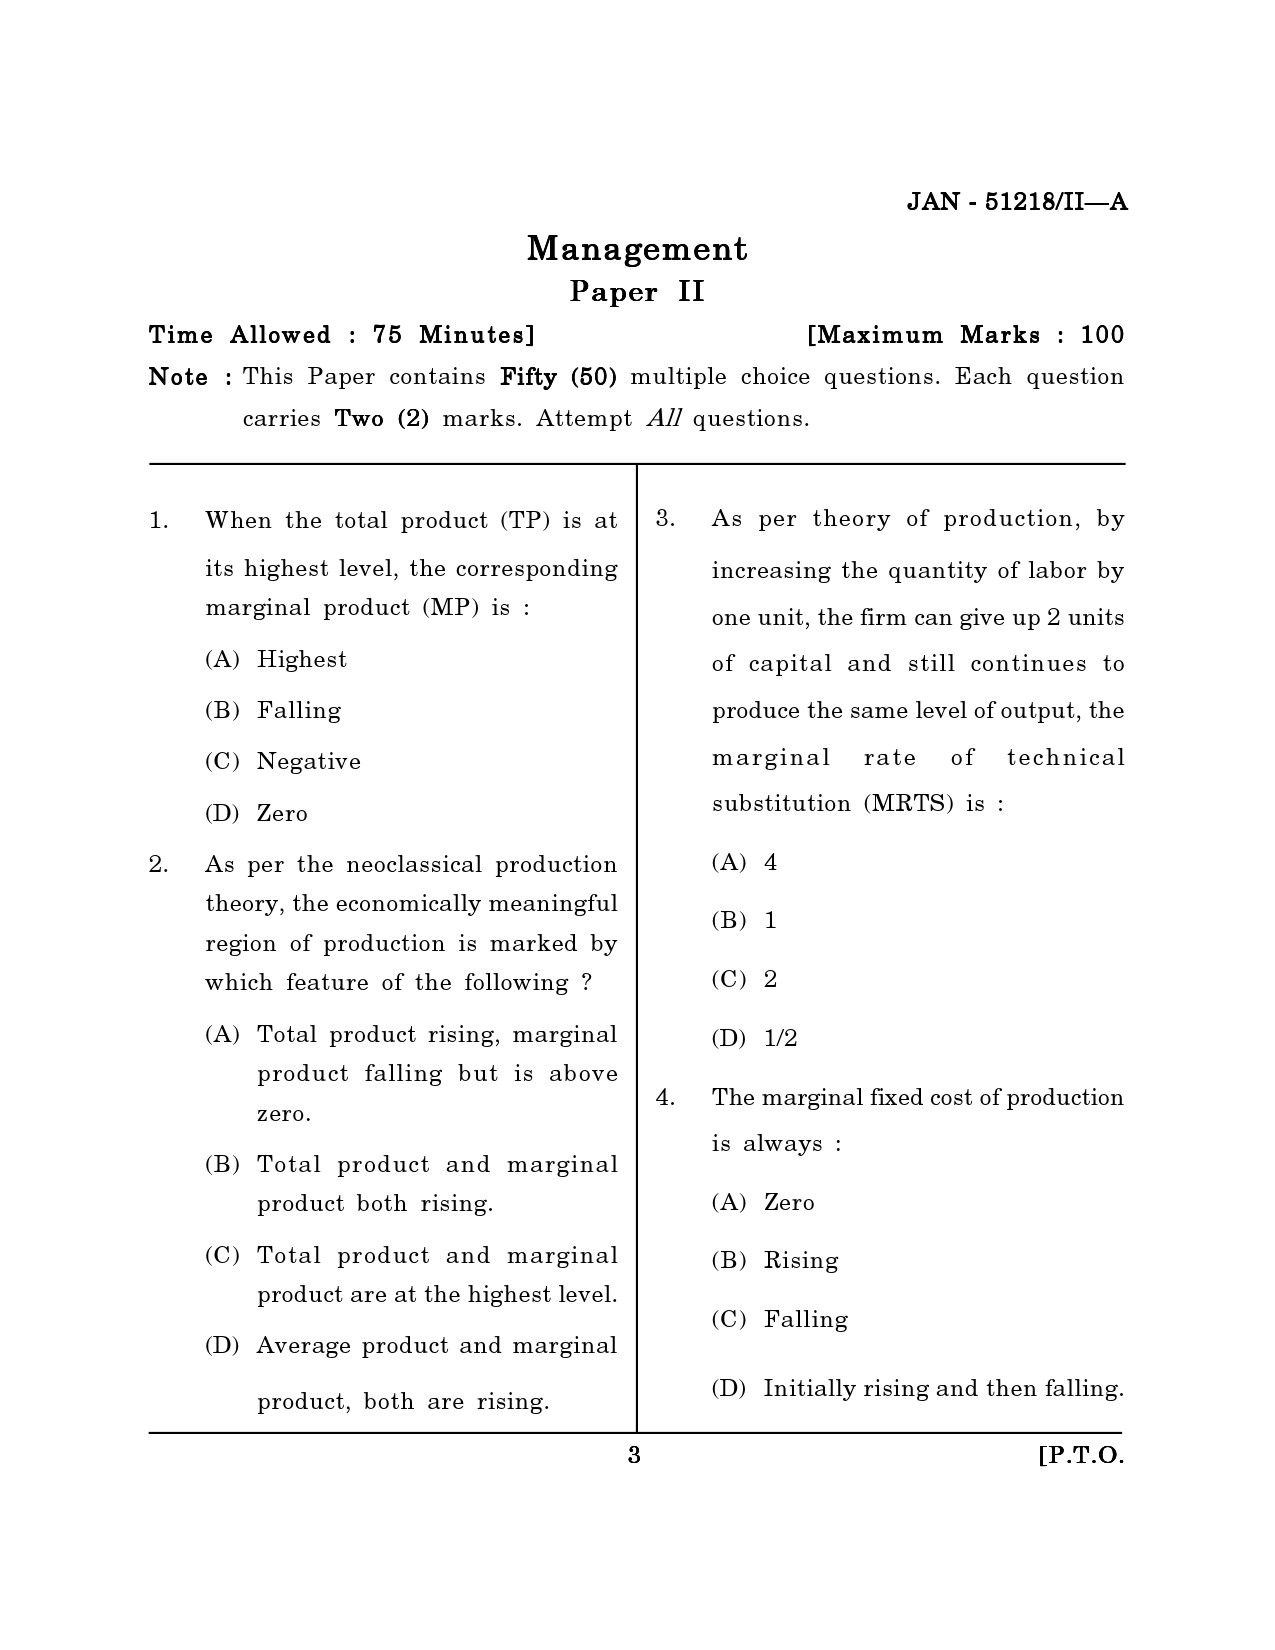 Maharashtra SET Management Question Paper II January 2018 2